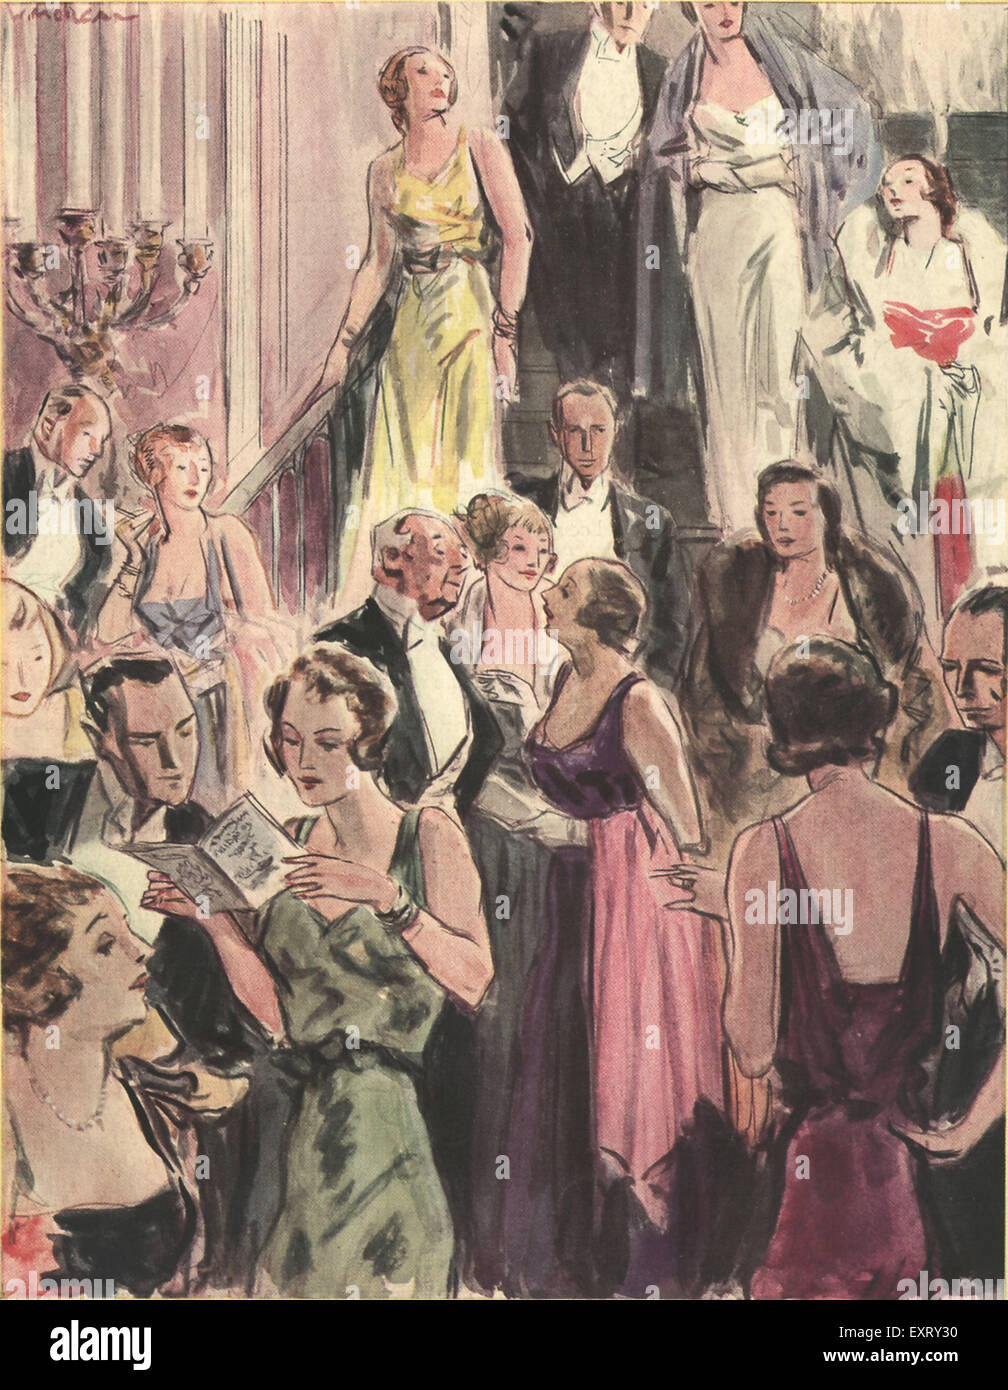 1930 USA l'intervalle d'Opéra Magazine Advert Banque D'Images